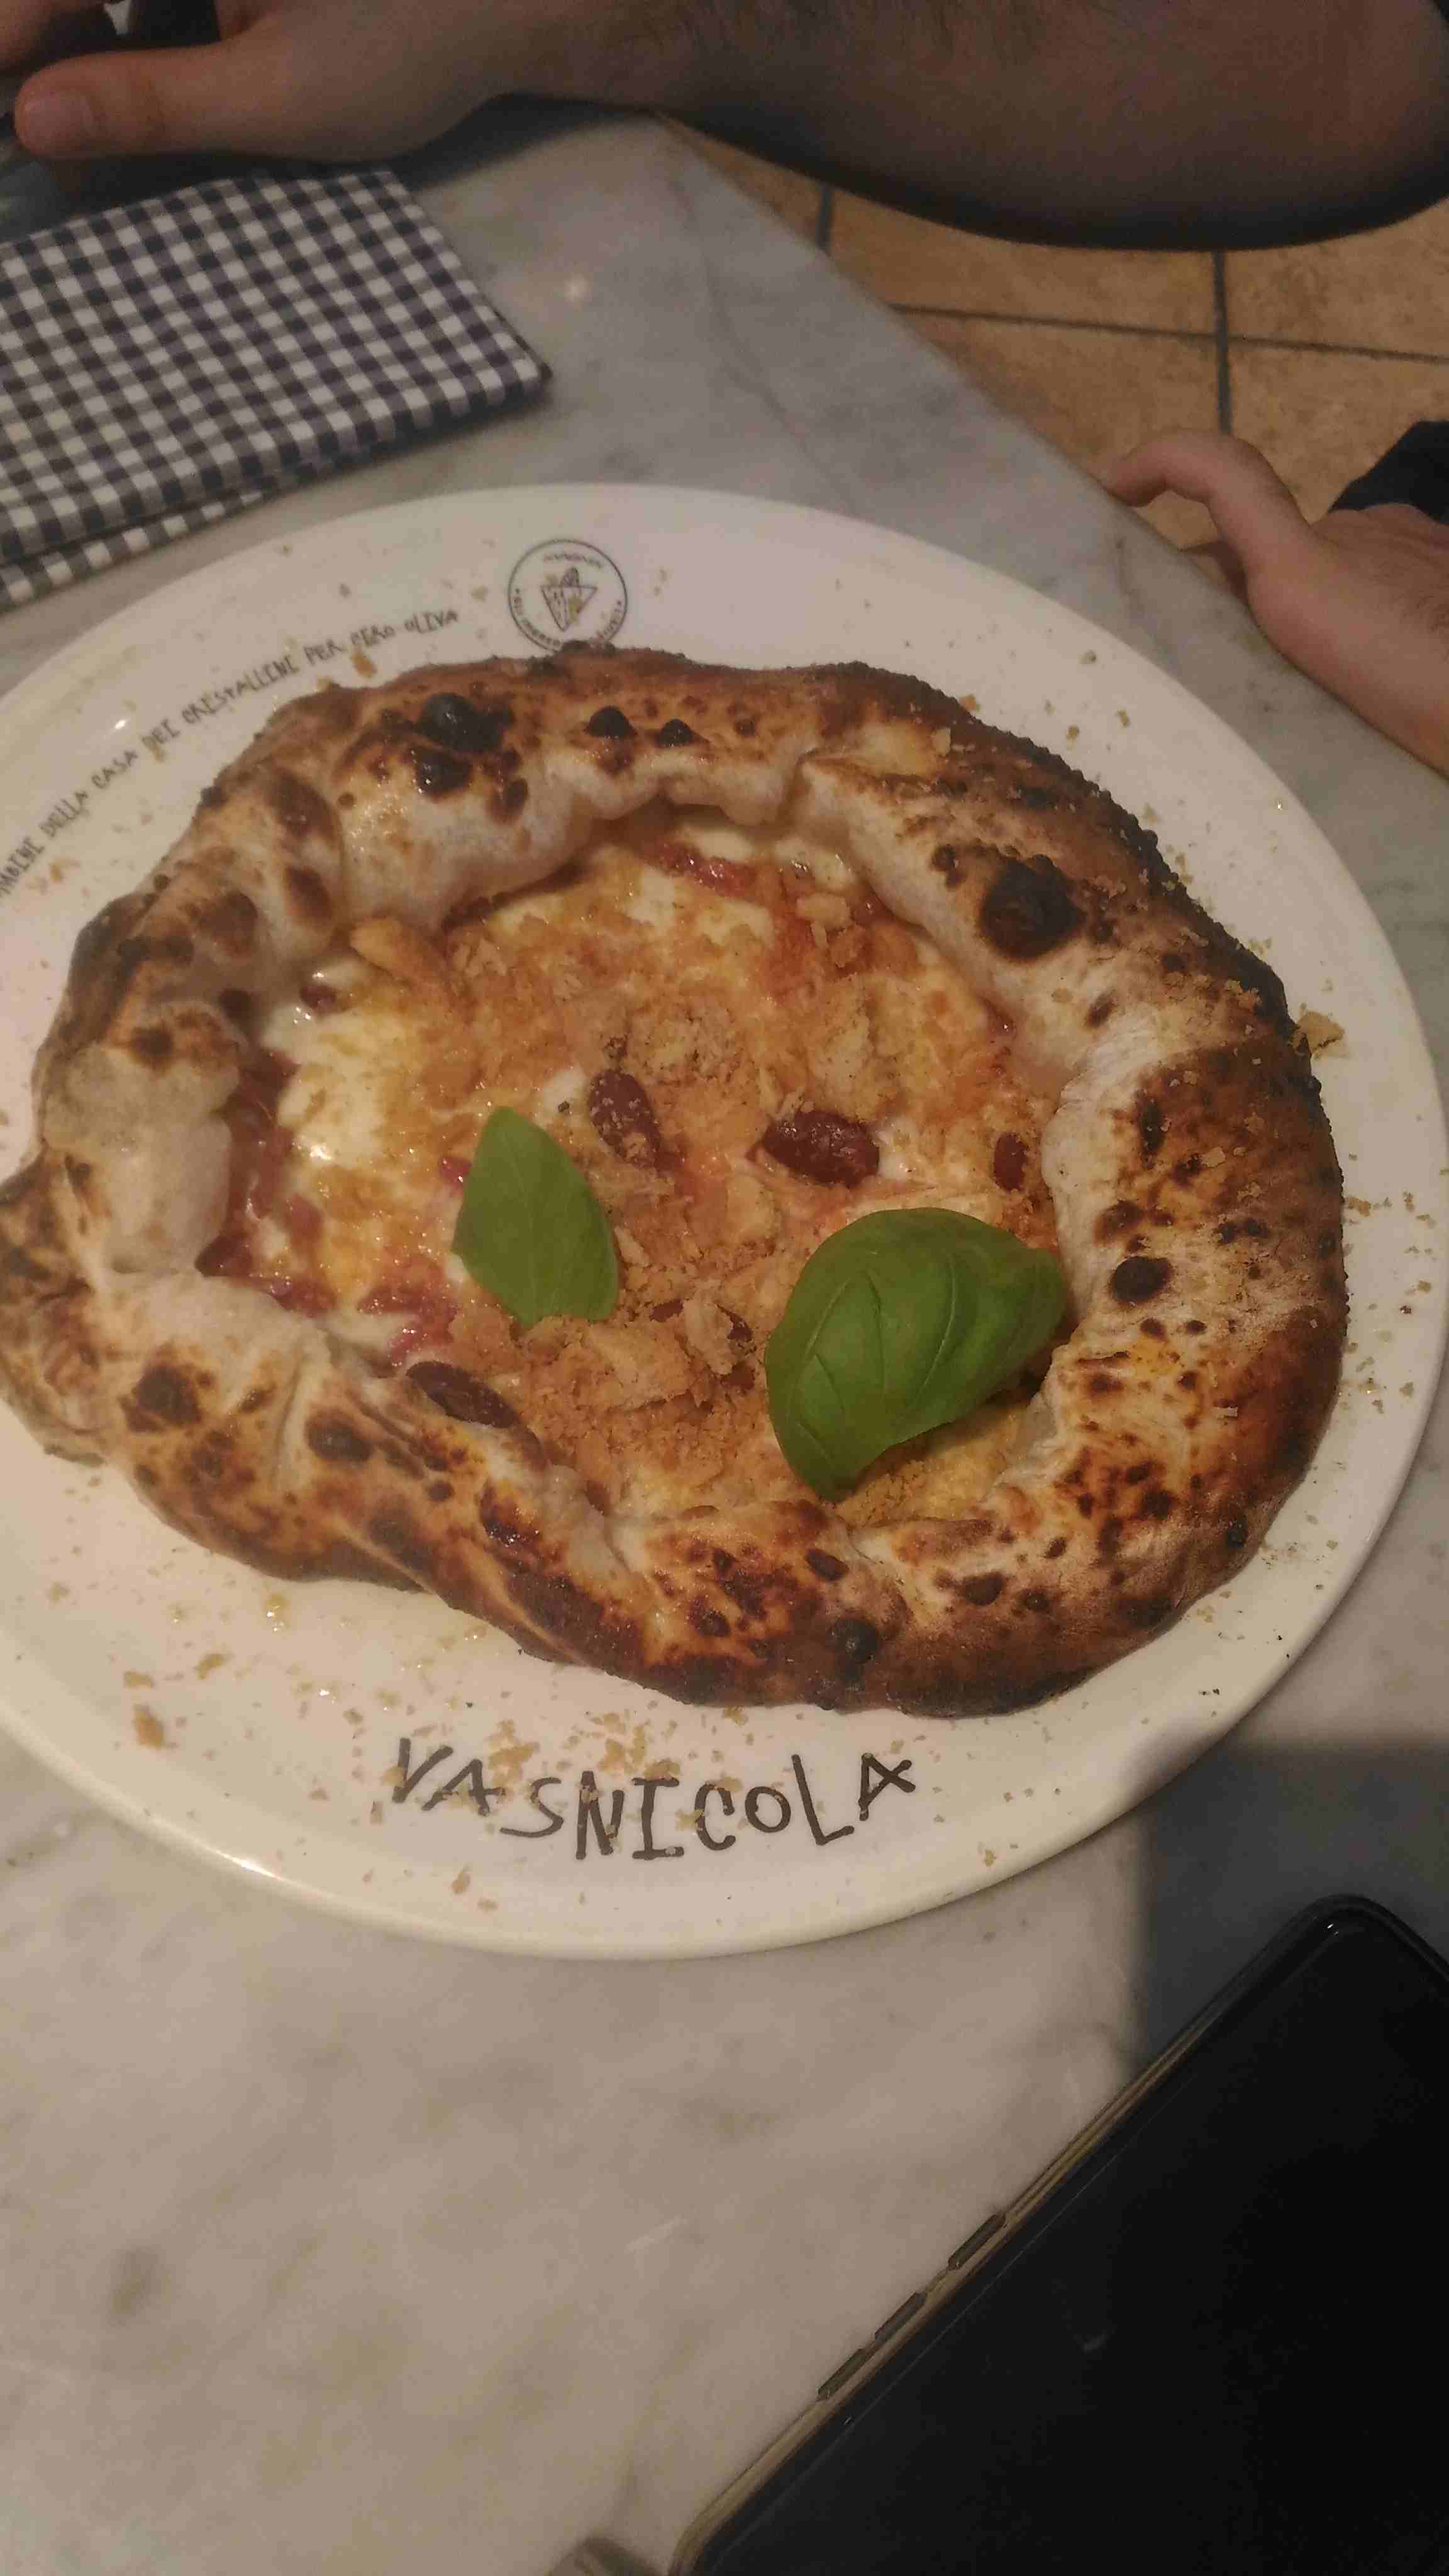 The Fondazione San Gennaro stuffed crust pizza.